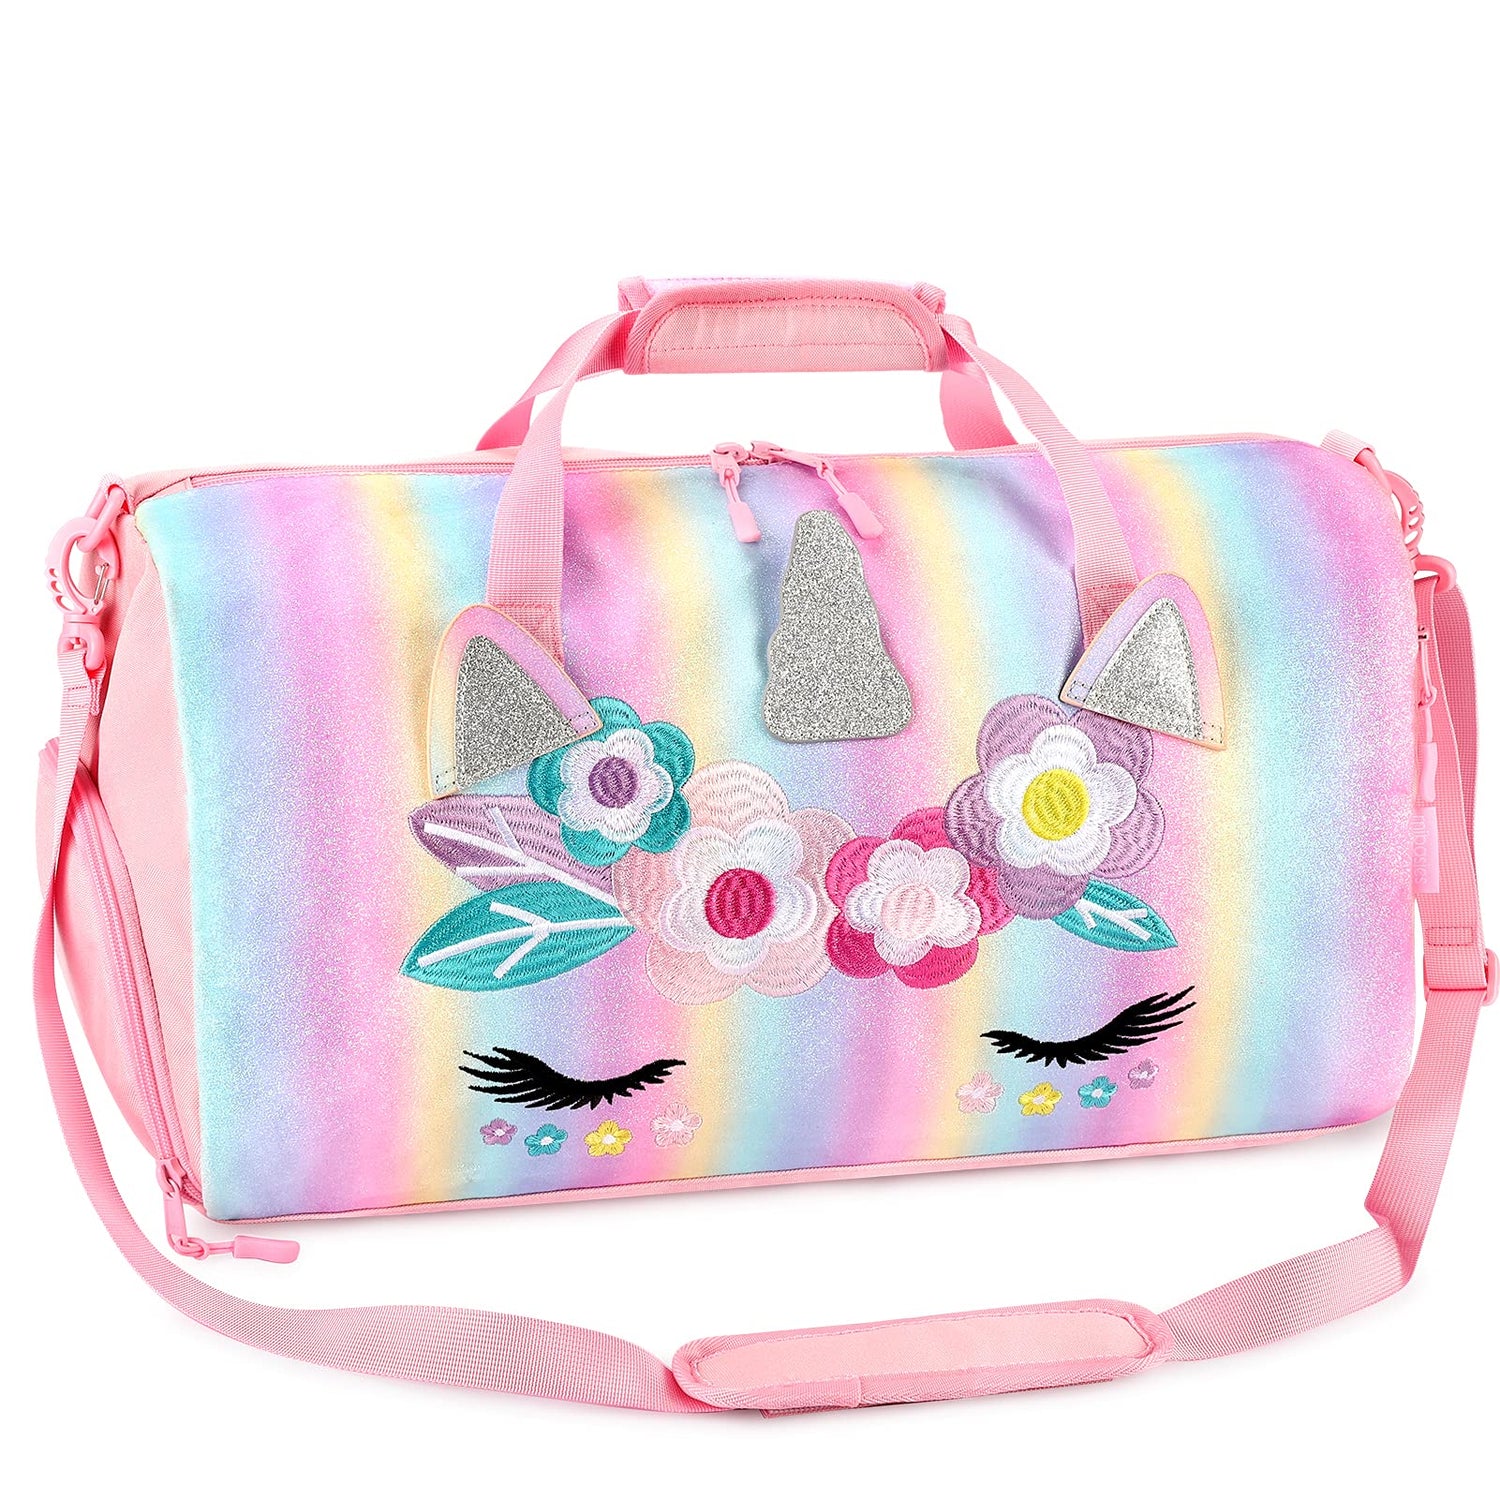 Unicorn Duffle Bags for Girls Duffle Bag Mibasies Pink Blue Rainbow 